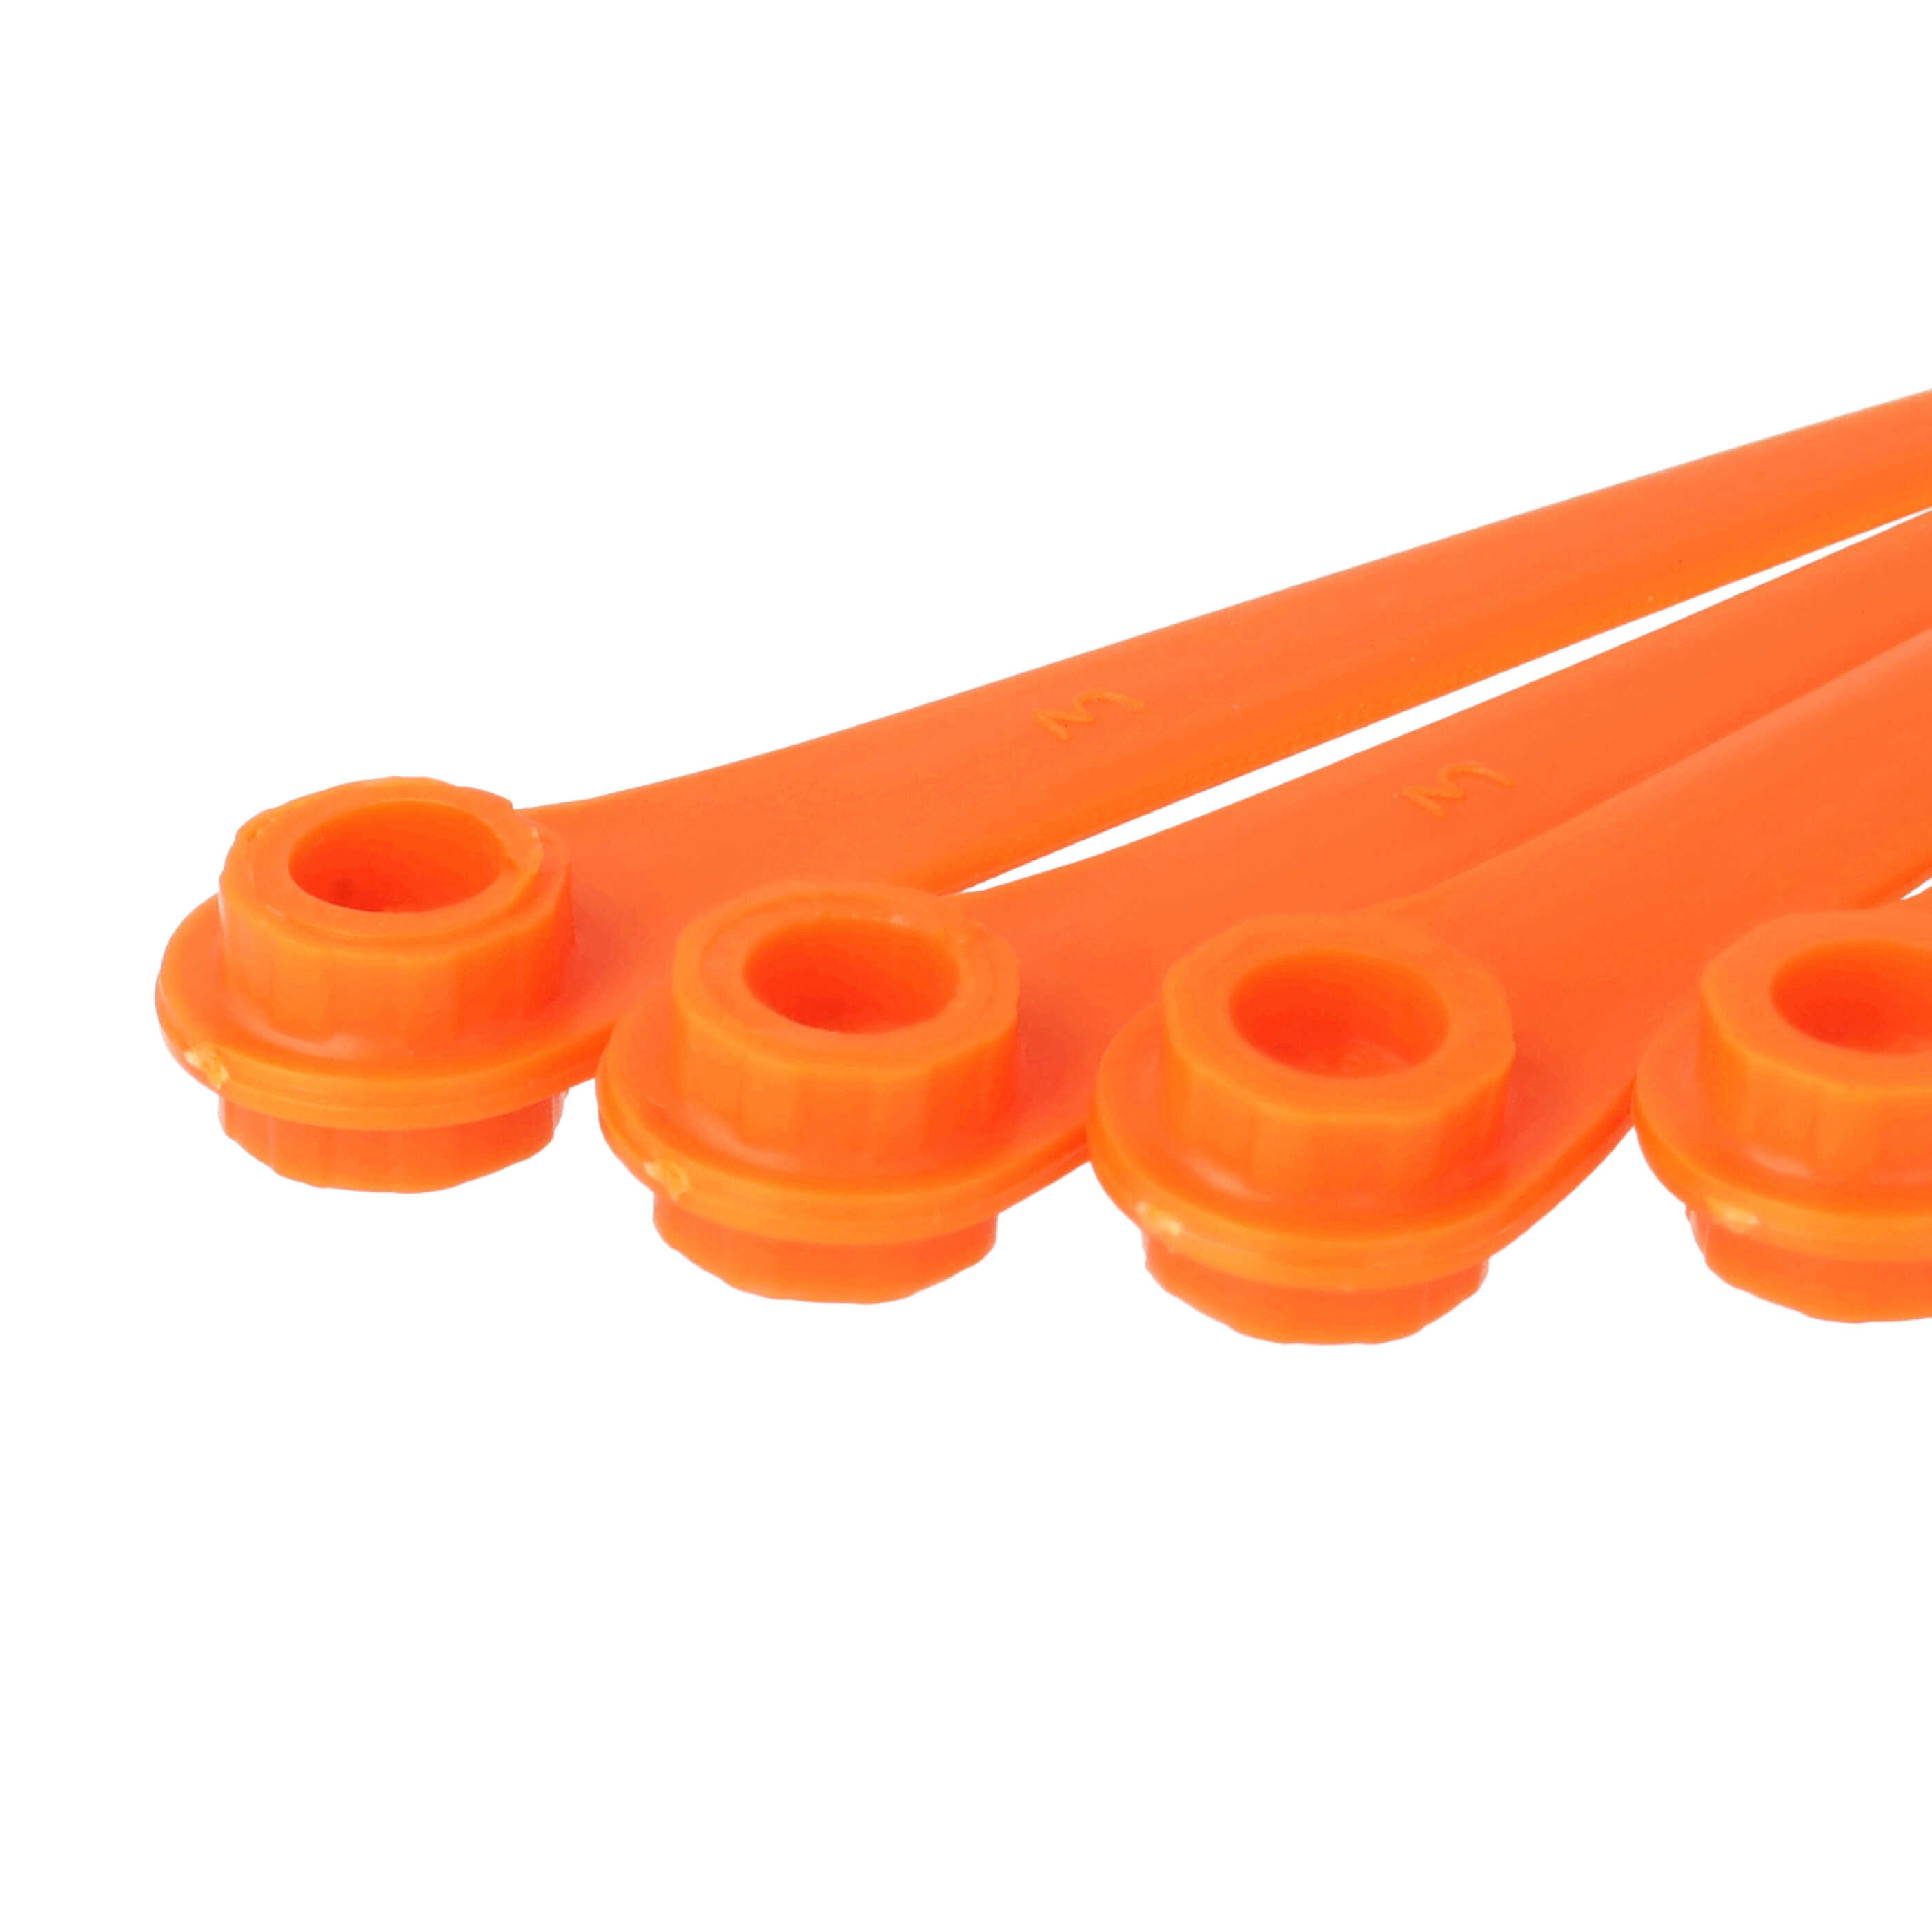 5x Lama sostituisce Gardena RotorCut 5368-20 per tagliaerba - arancione, plastica